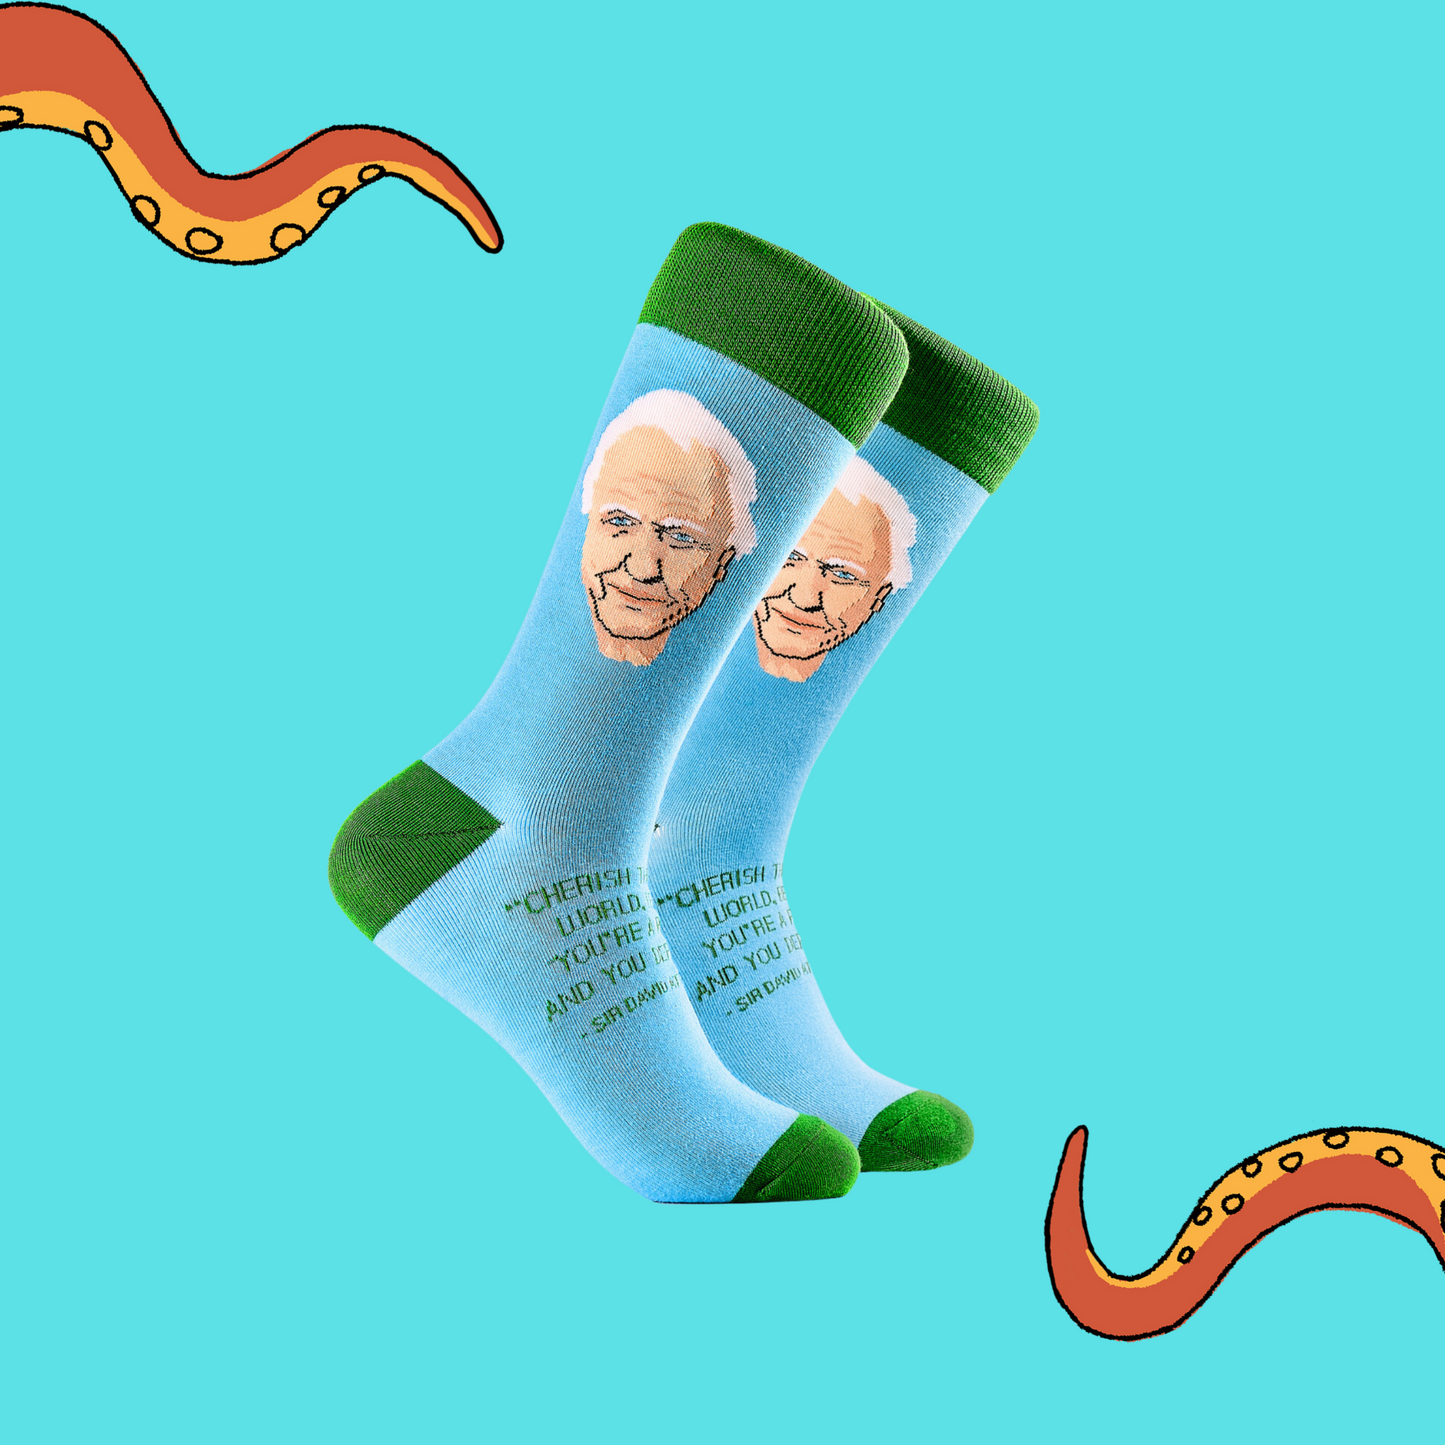 A pair of socks depicting tSir David Attenborough Socks. Blue legs, green cuff, heel and toe.